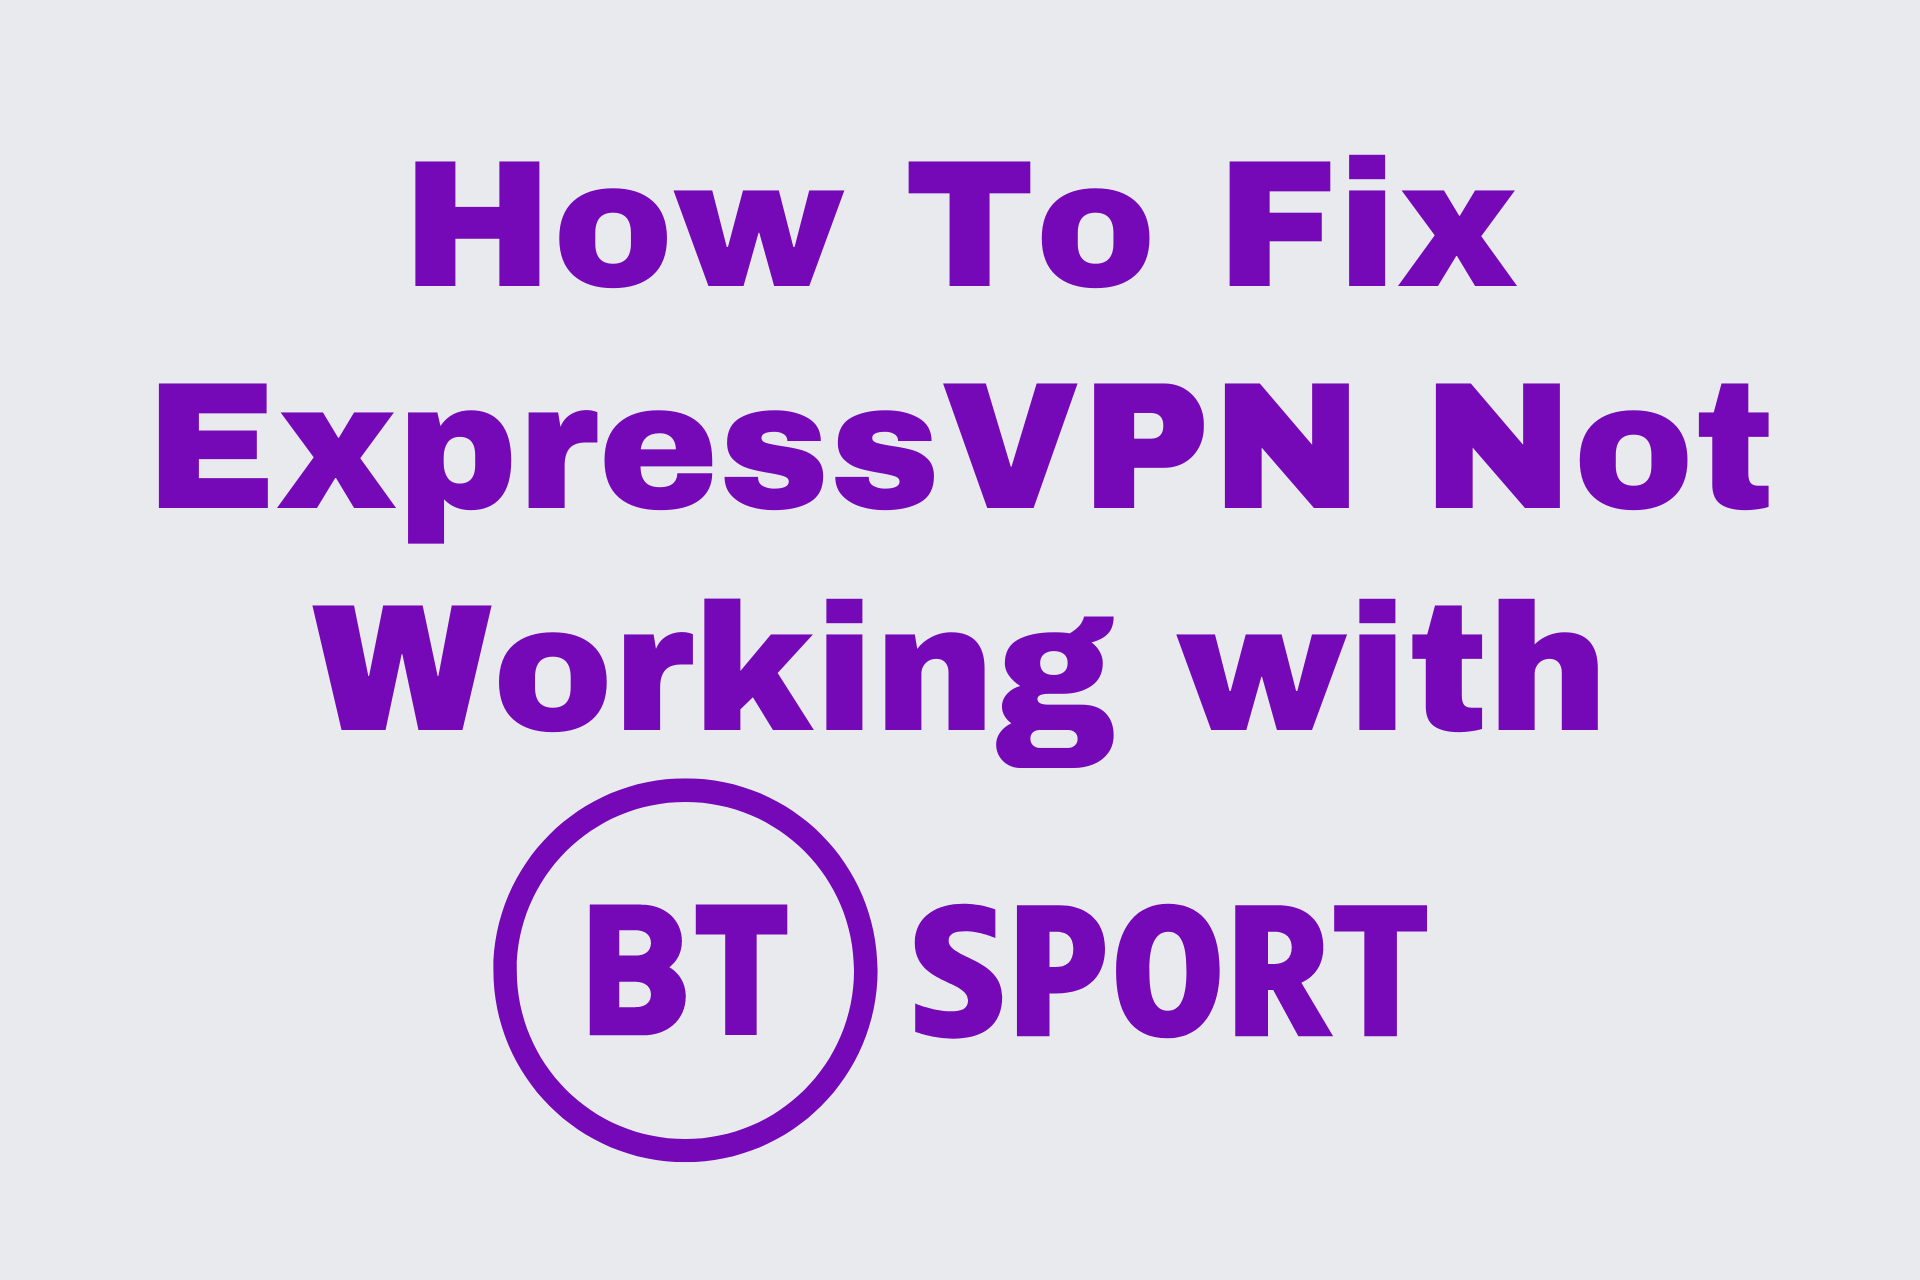 ExpressVPN Not Working with BT Sport